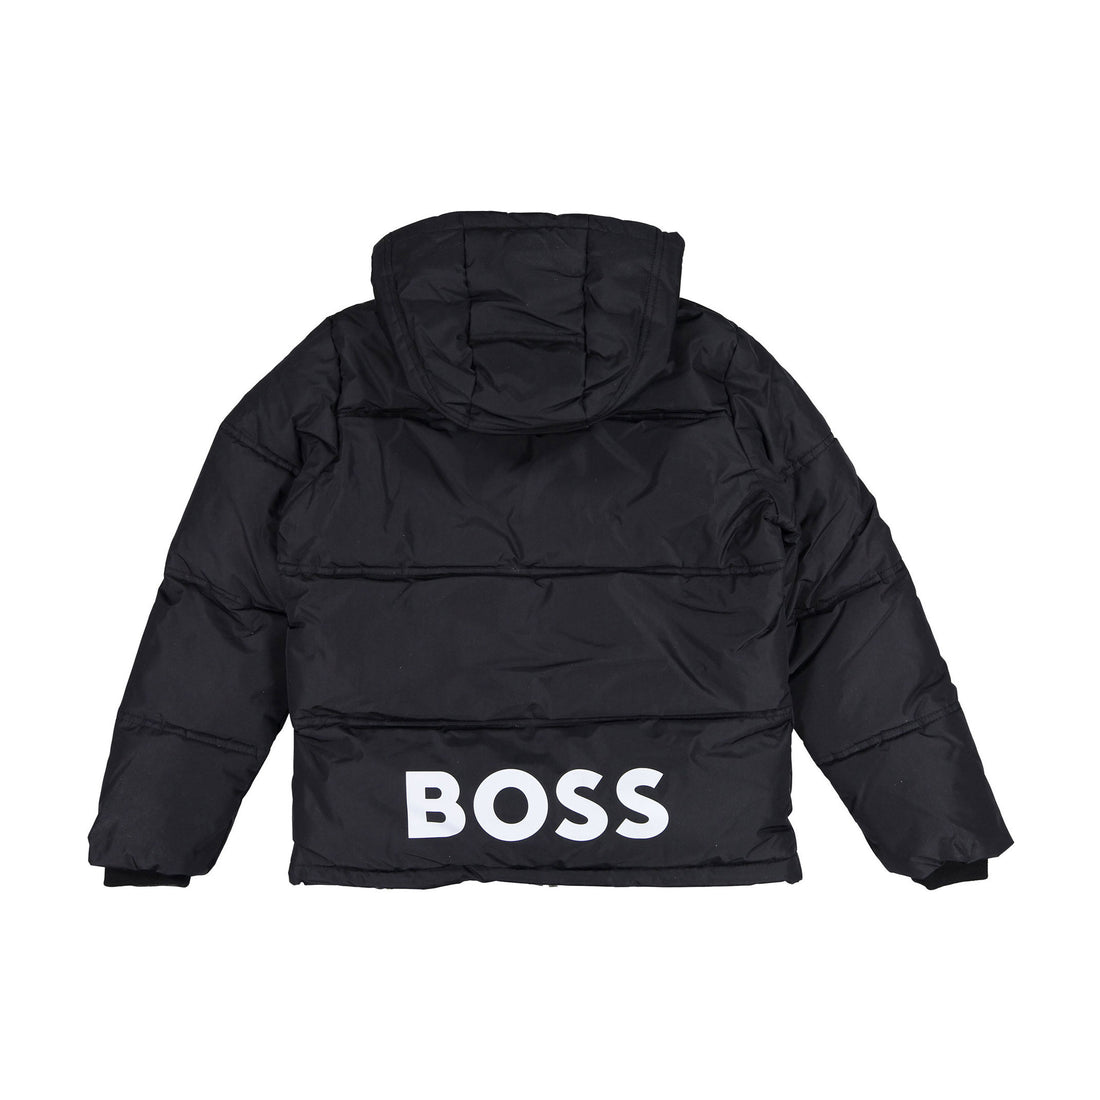 Hugo Boss Black Puffer Jacket